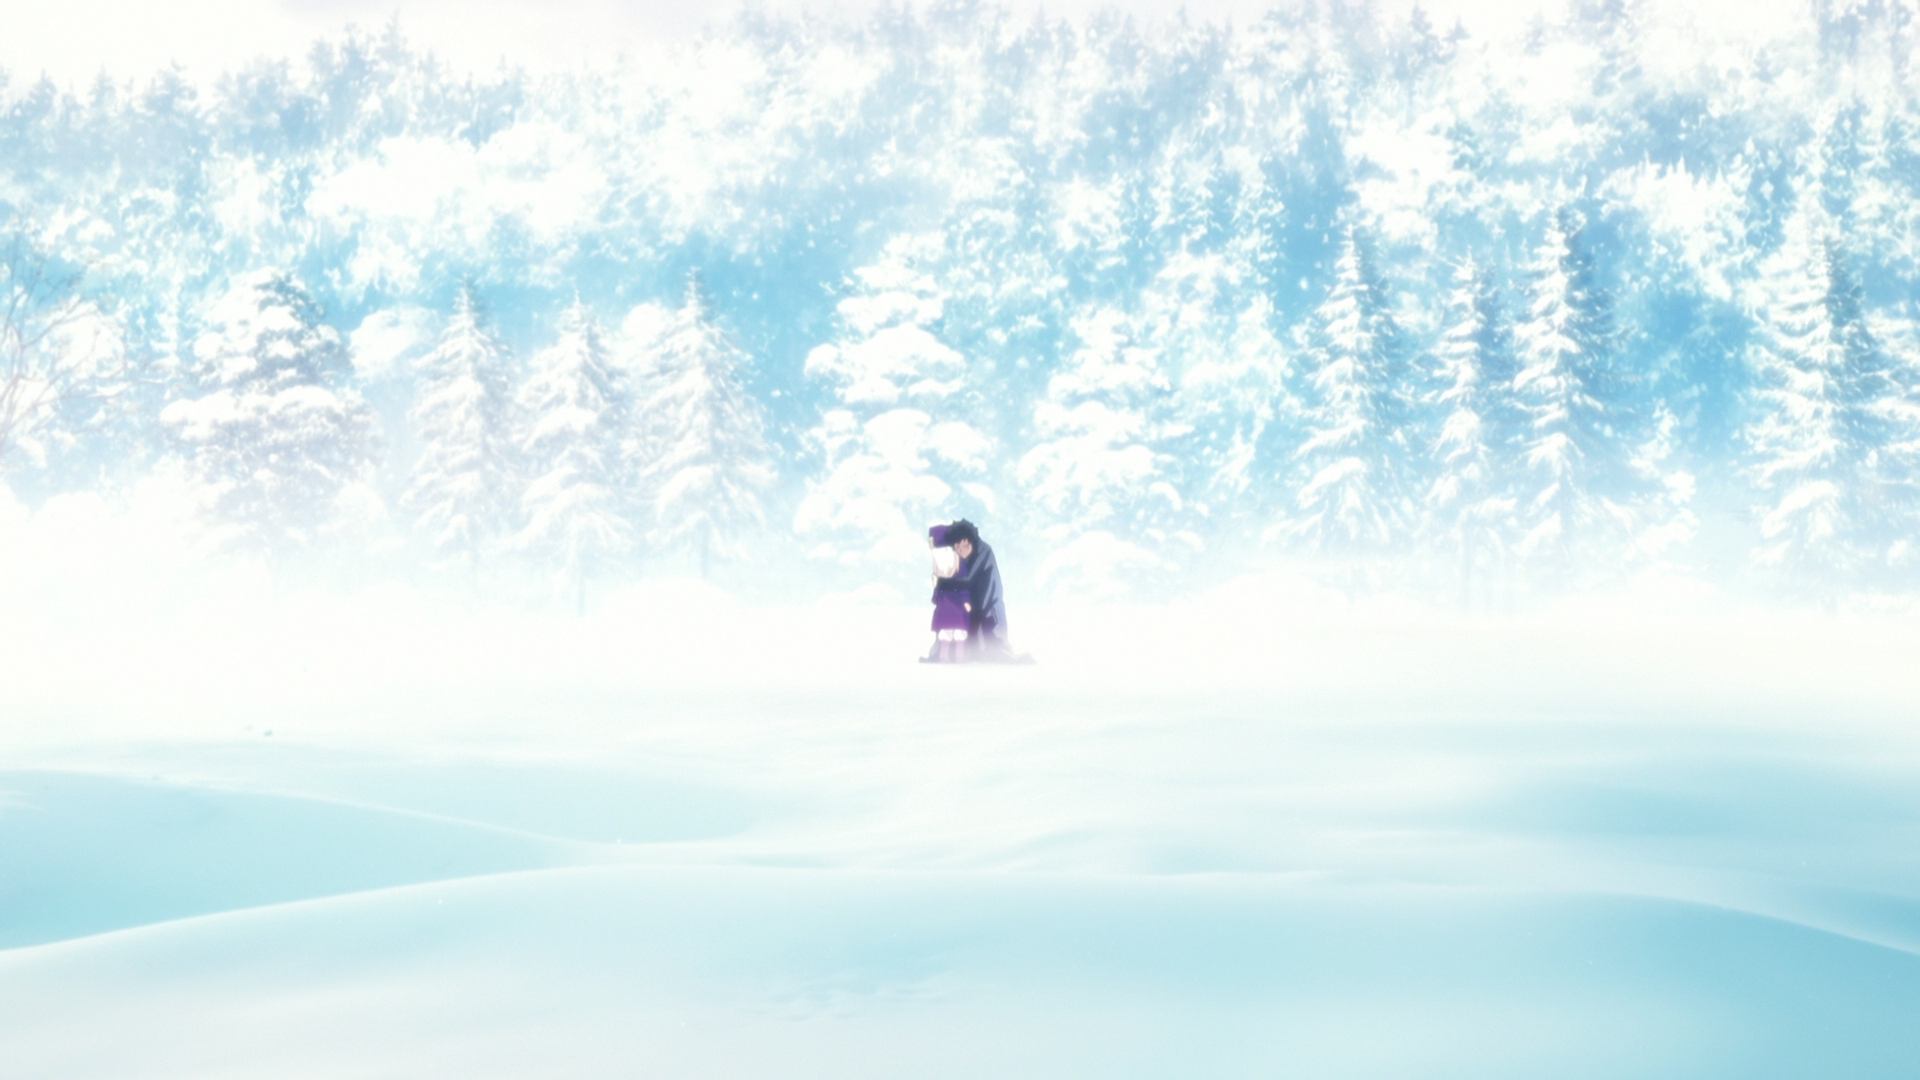 Anime 1920x1080 Fate/Zero anime Fate series Kiritsugu Emiya Illyasviel von Einzbern winter snow trees anime girls alone women cold women outdoors sitting outdoors